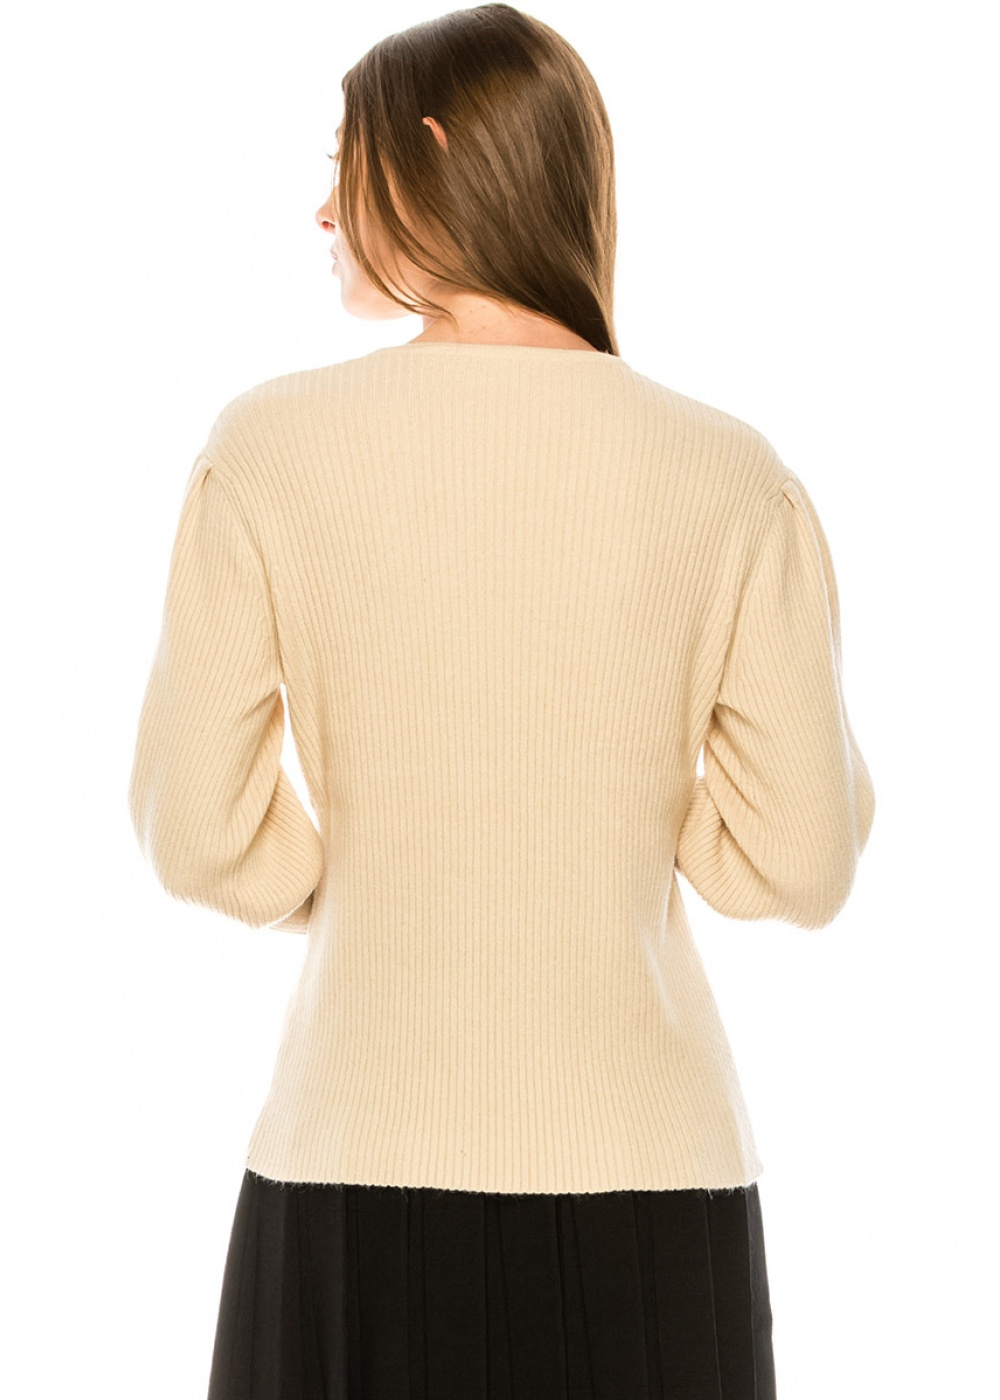 Crew neck leg-of-mutton sleeve sweater in beige